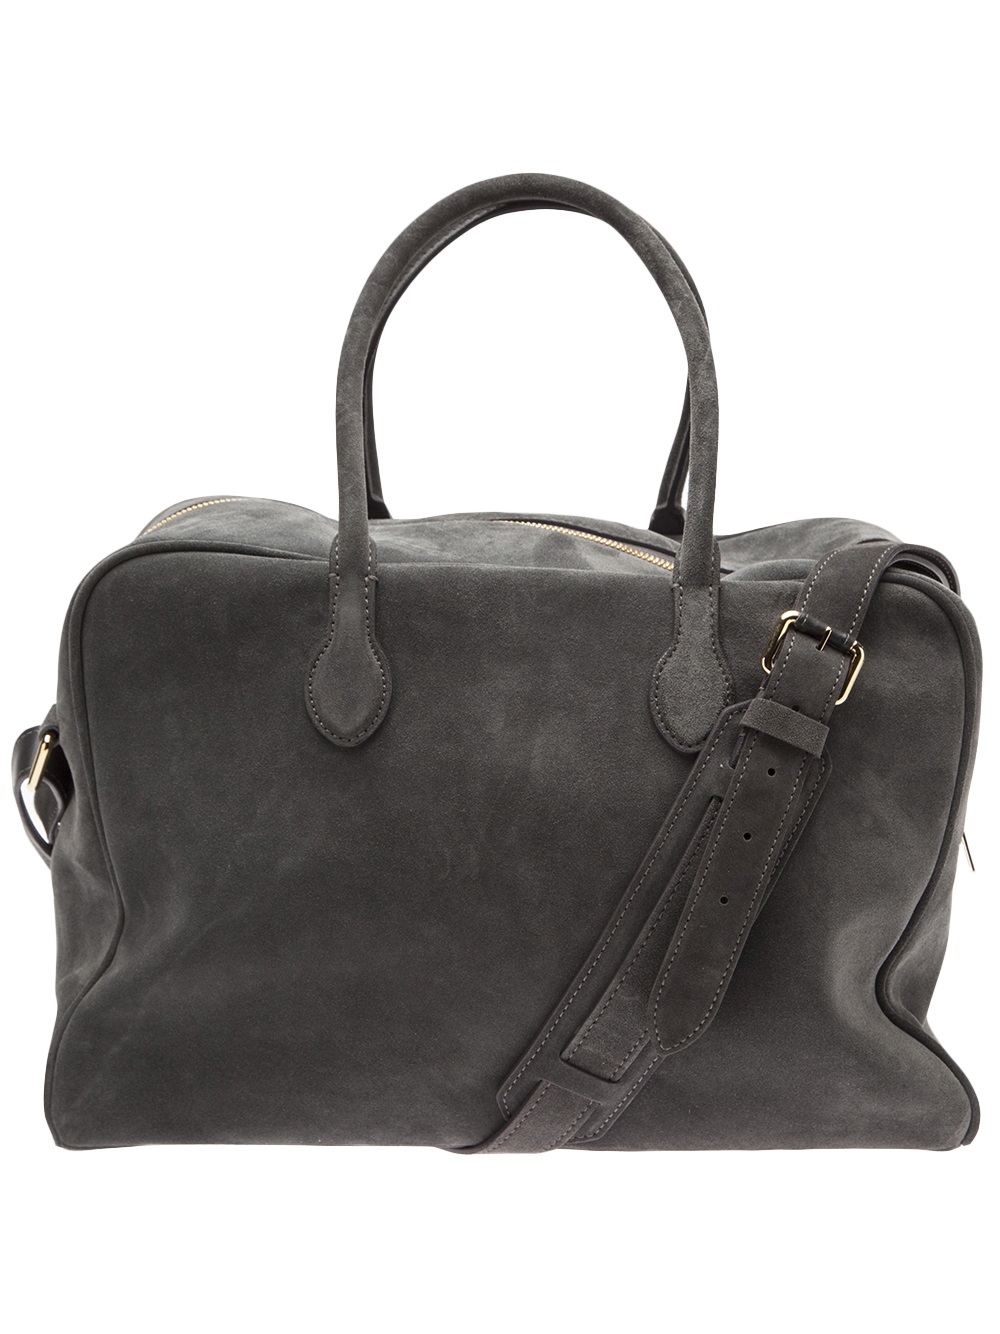 Balmain Duffle Bag in Gray (grey) | Lyst